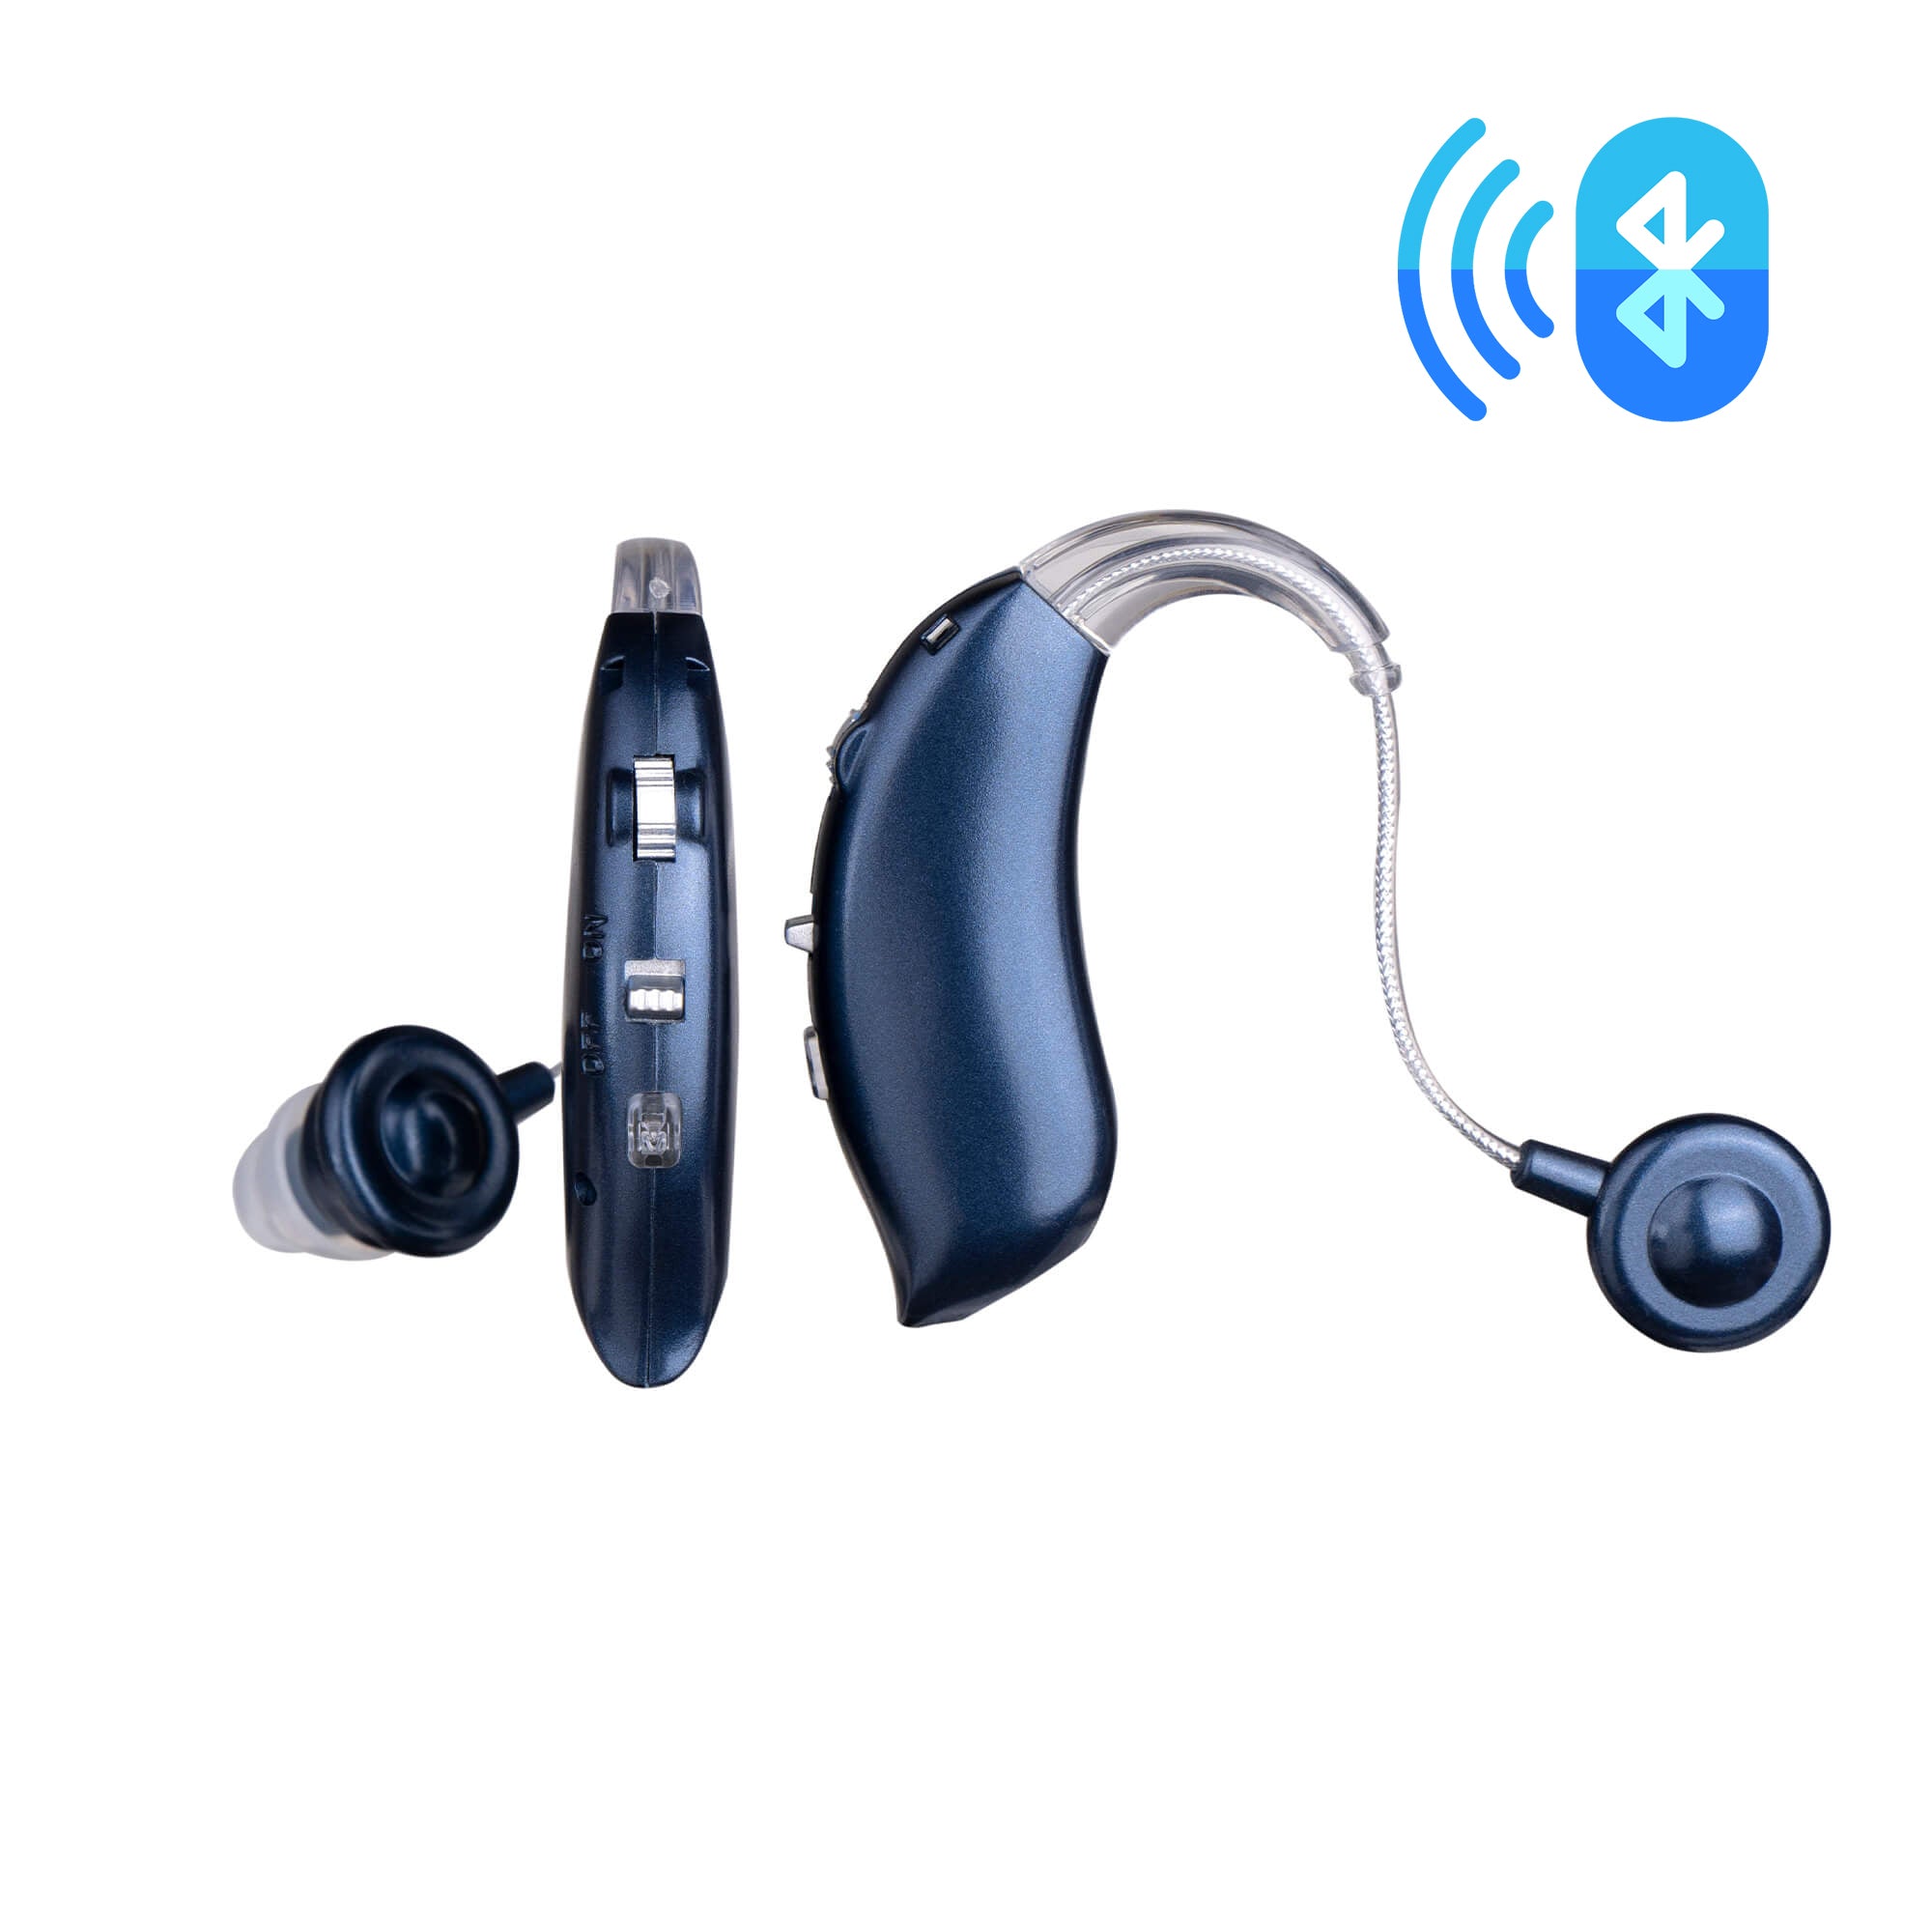 Fisdemo J Bluetooth FDA-Cleared OTC Adult Hearing Aids